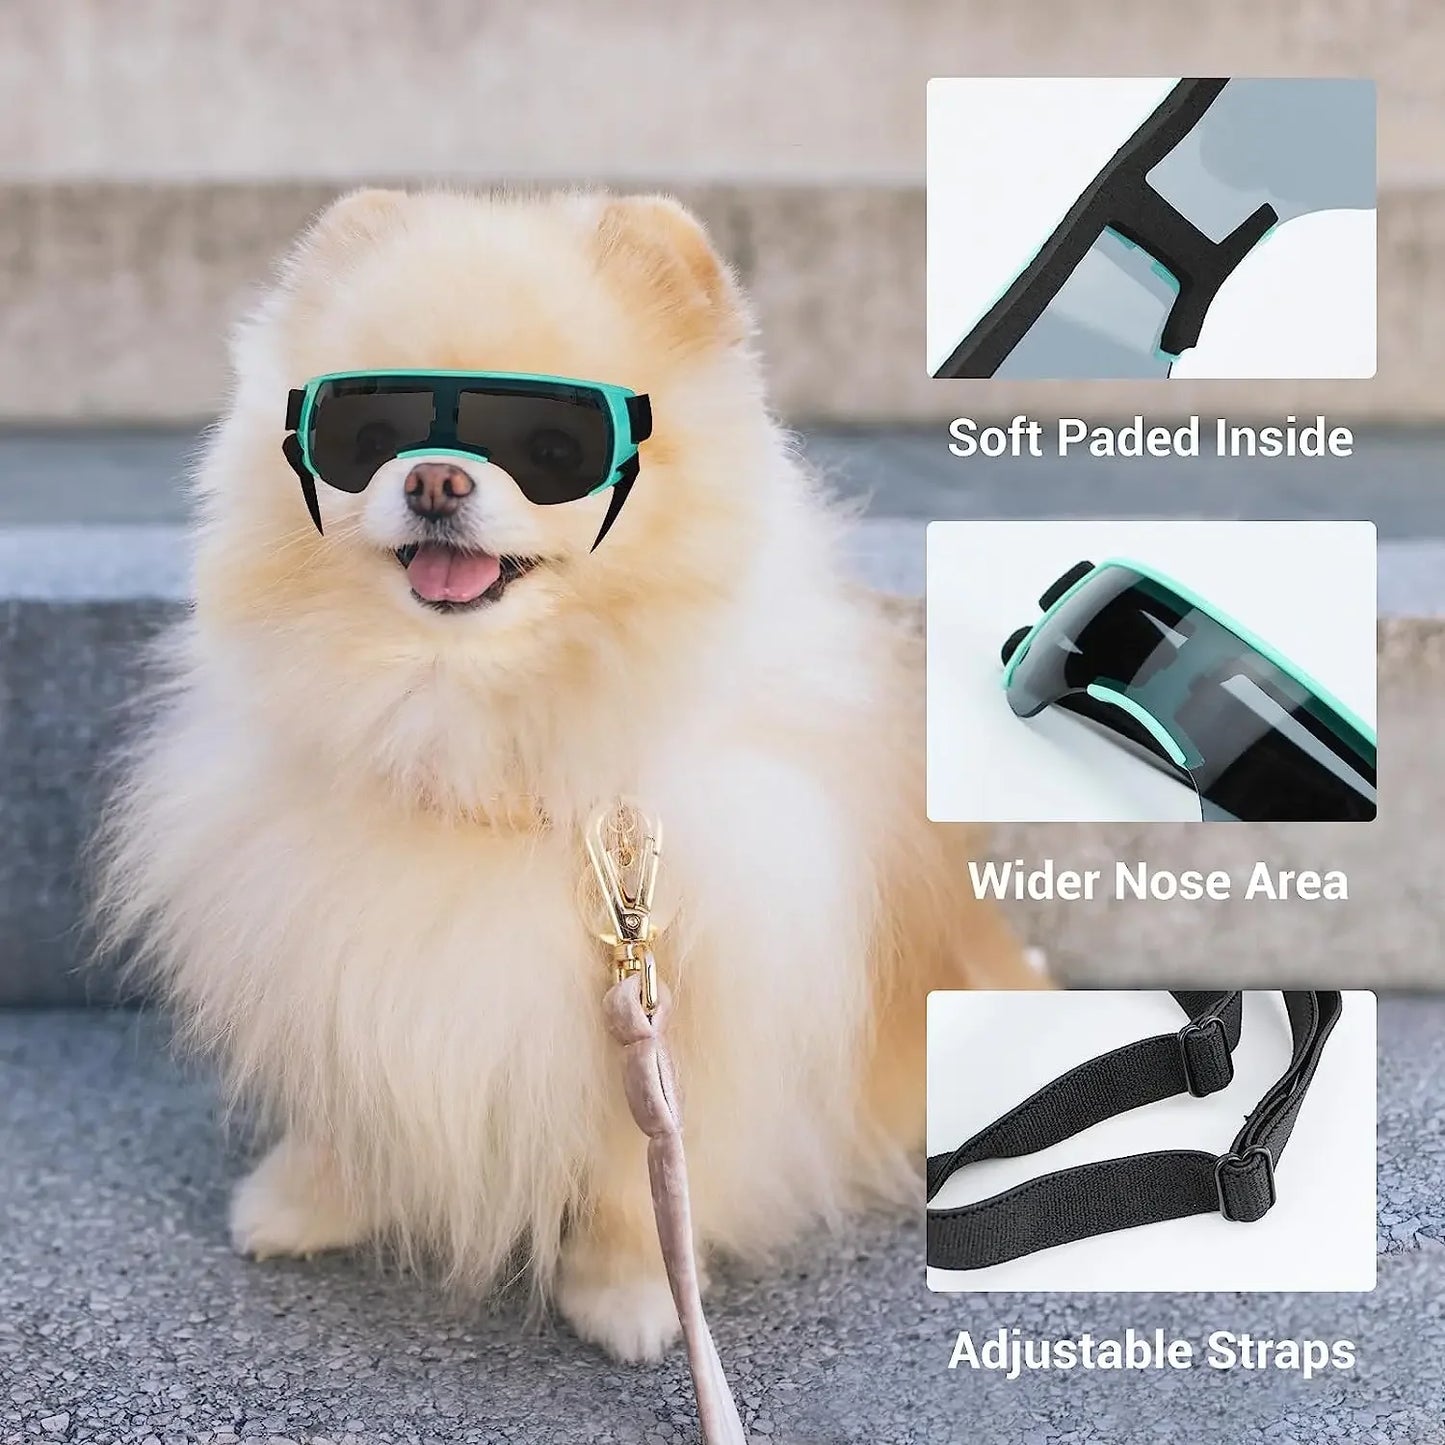 Windproof Anti-UV Glasses